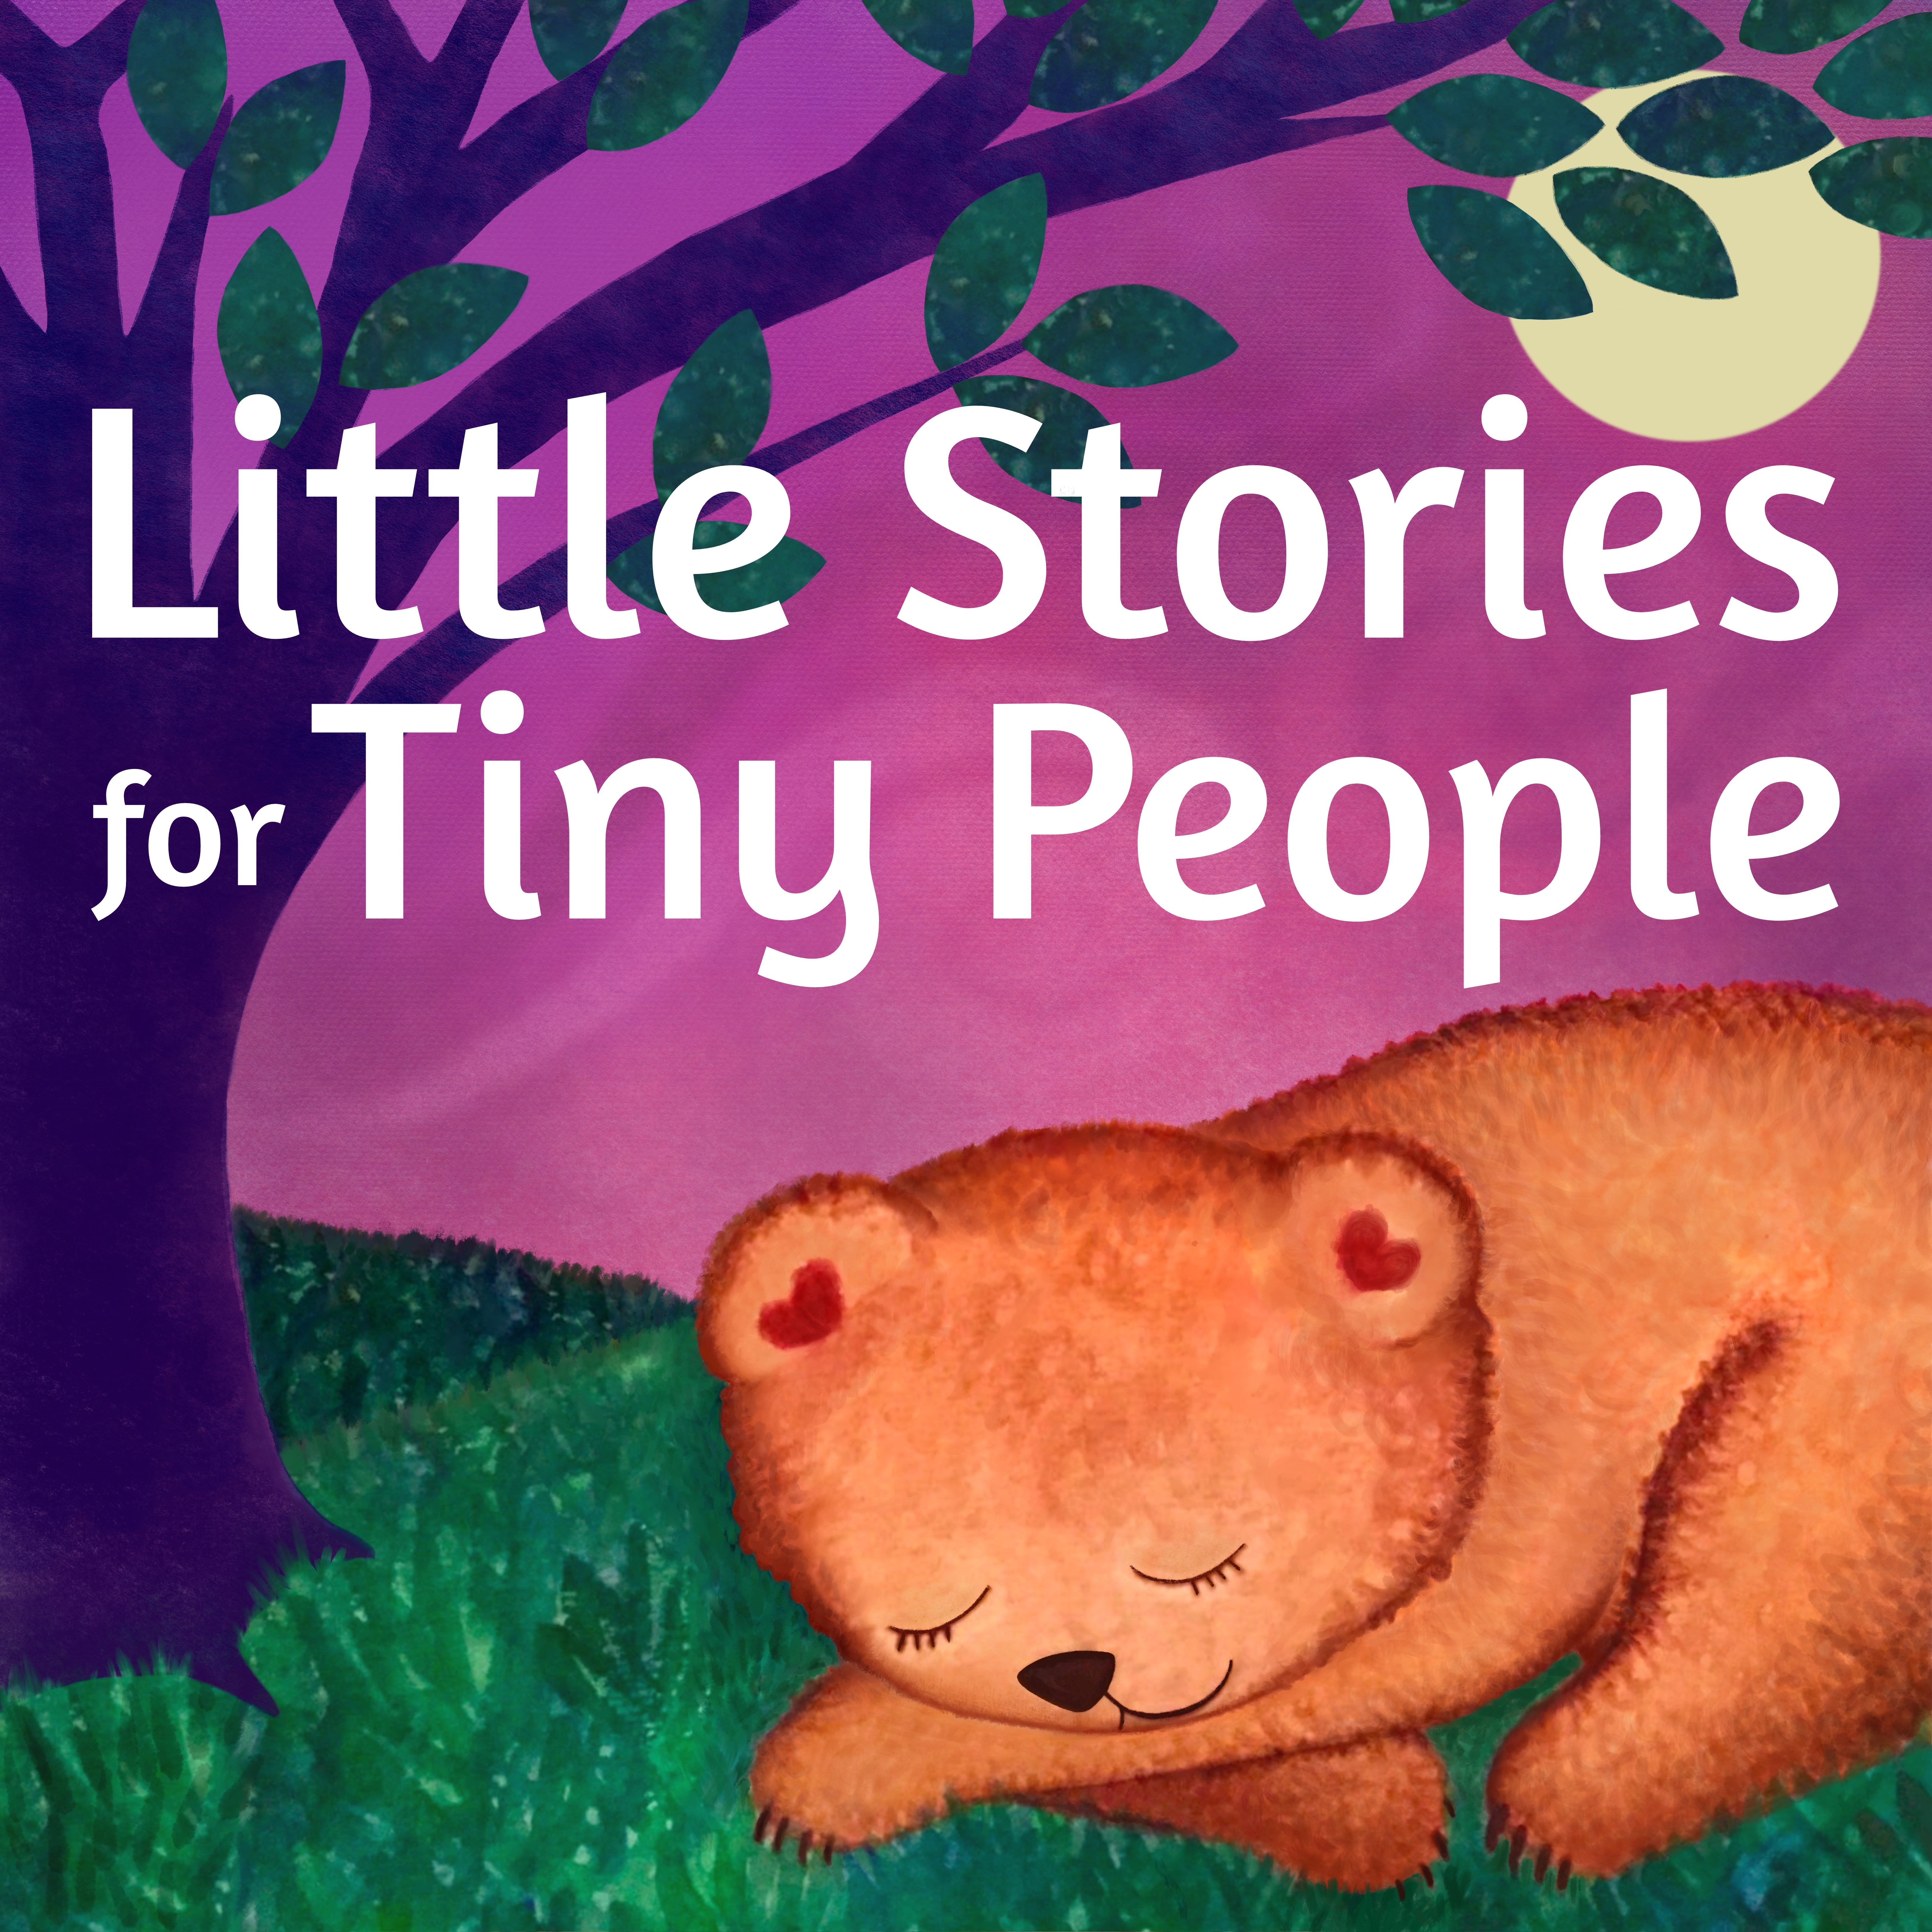 Little Store. Little story. Little stories for Kids. For story.